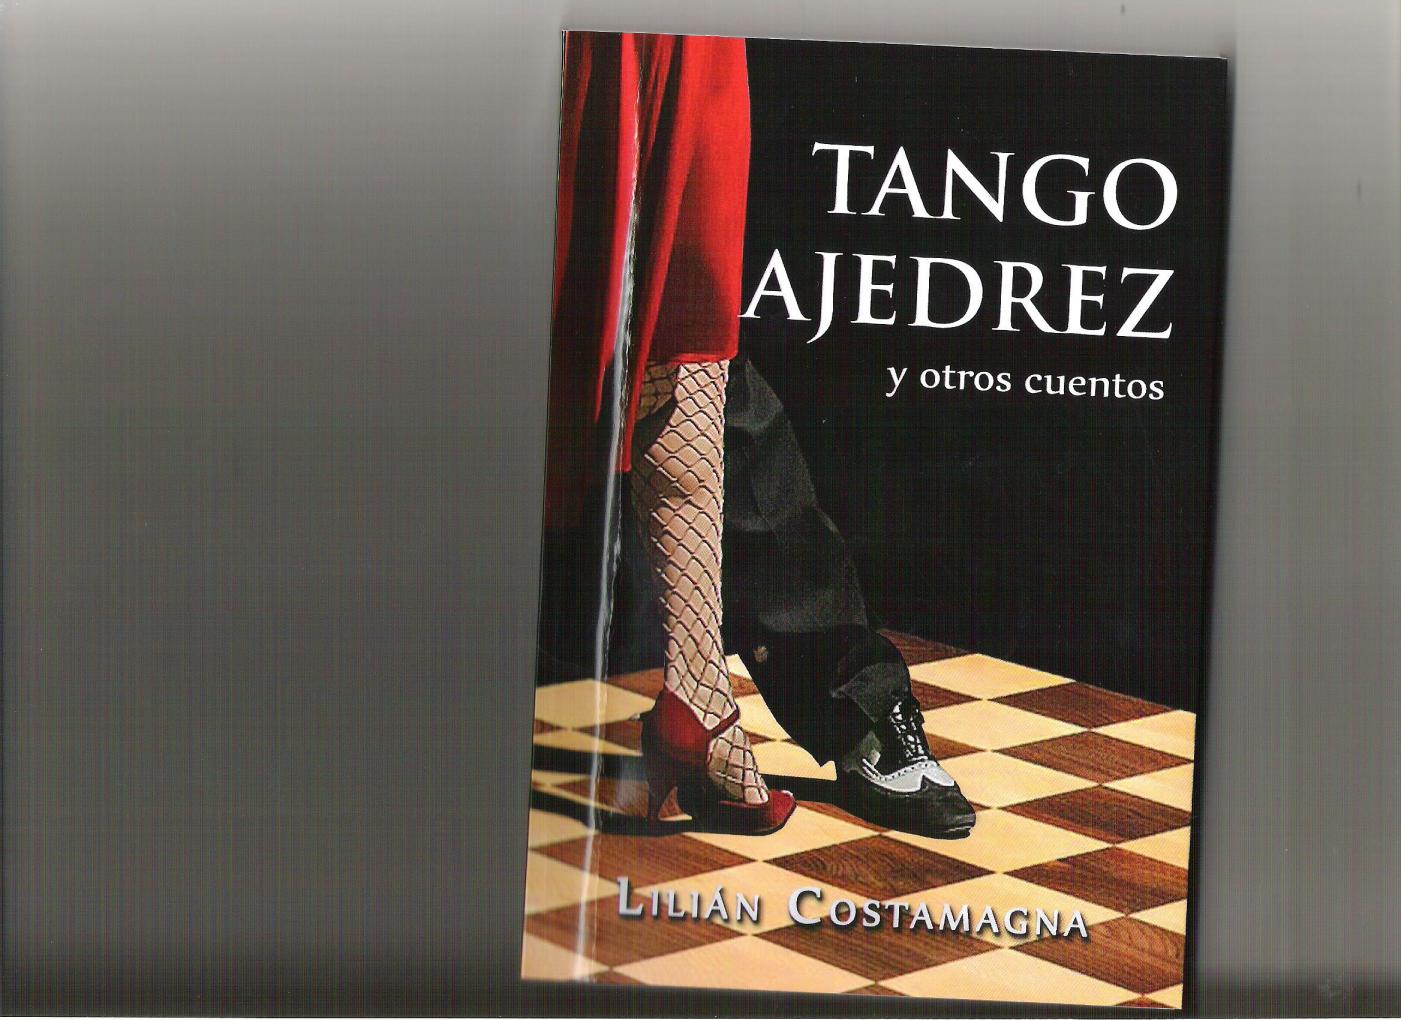 Tango Ajedrez de Lilian Costamagna en la Biblioteca &#147;Pte Alfons&iacute;n&#148;